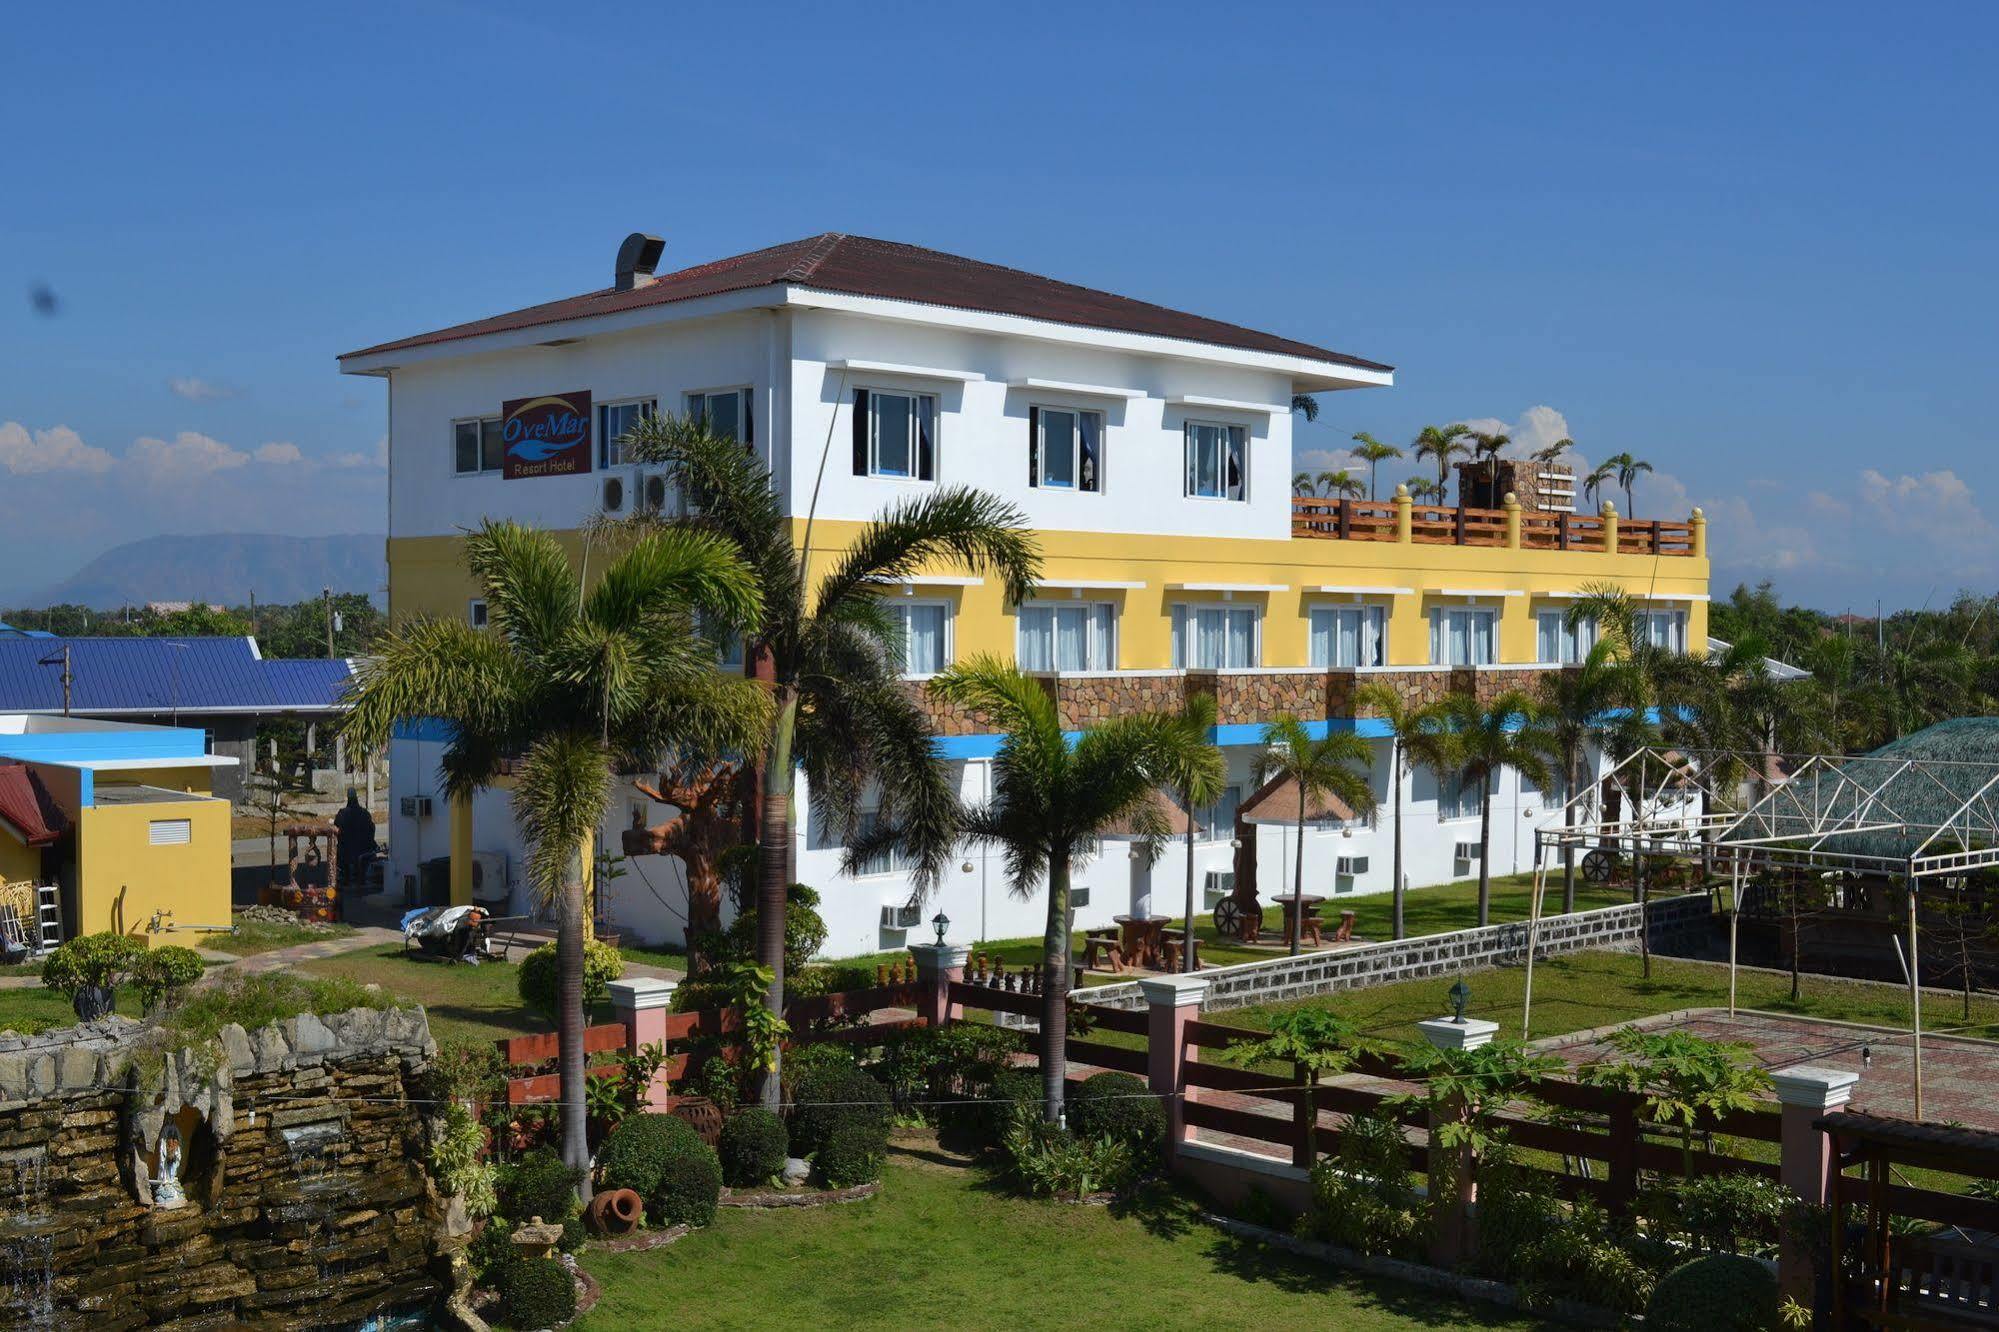 Ovemar Resort Hotel Vigan Exterior photo